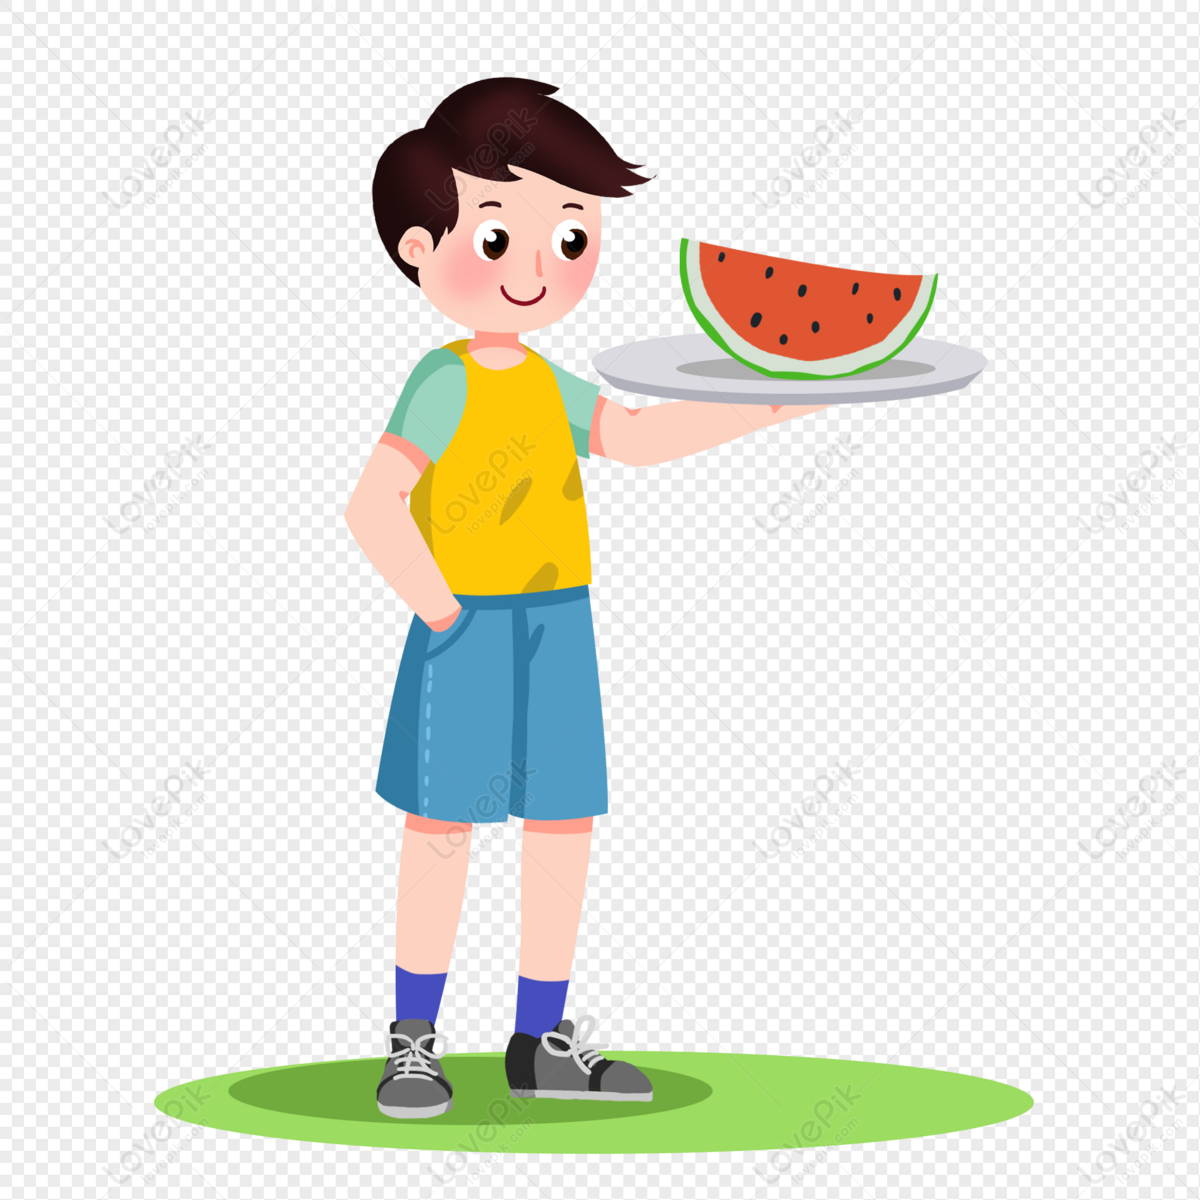 तरबूज खाने वाला कार्टून लड़का चित्र डाउनलोड_ग्राफिक्सPRFचित्र  आईडी401421647_PSDचित्र प्रारूपमुफ्त की तस्वीर